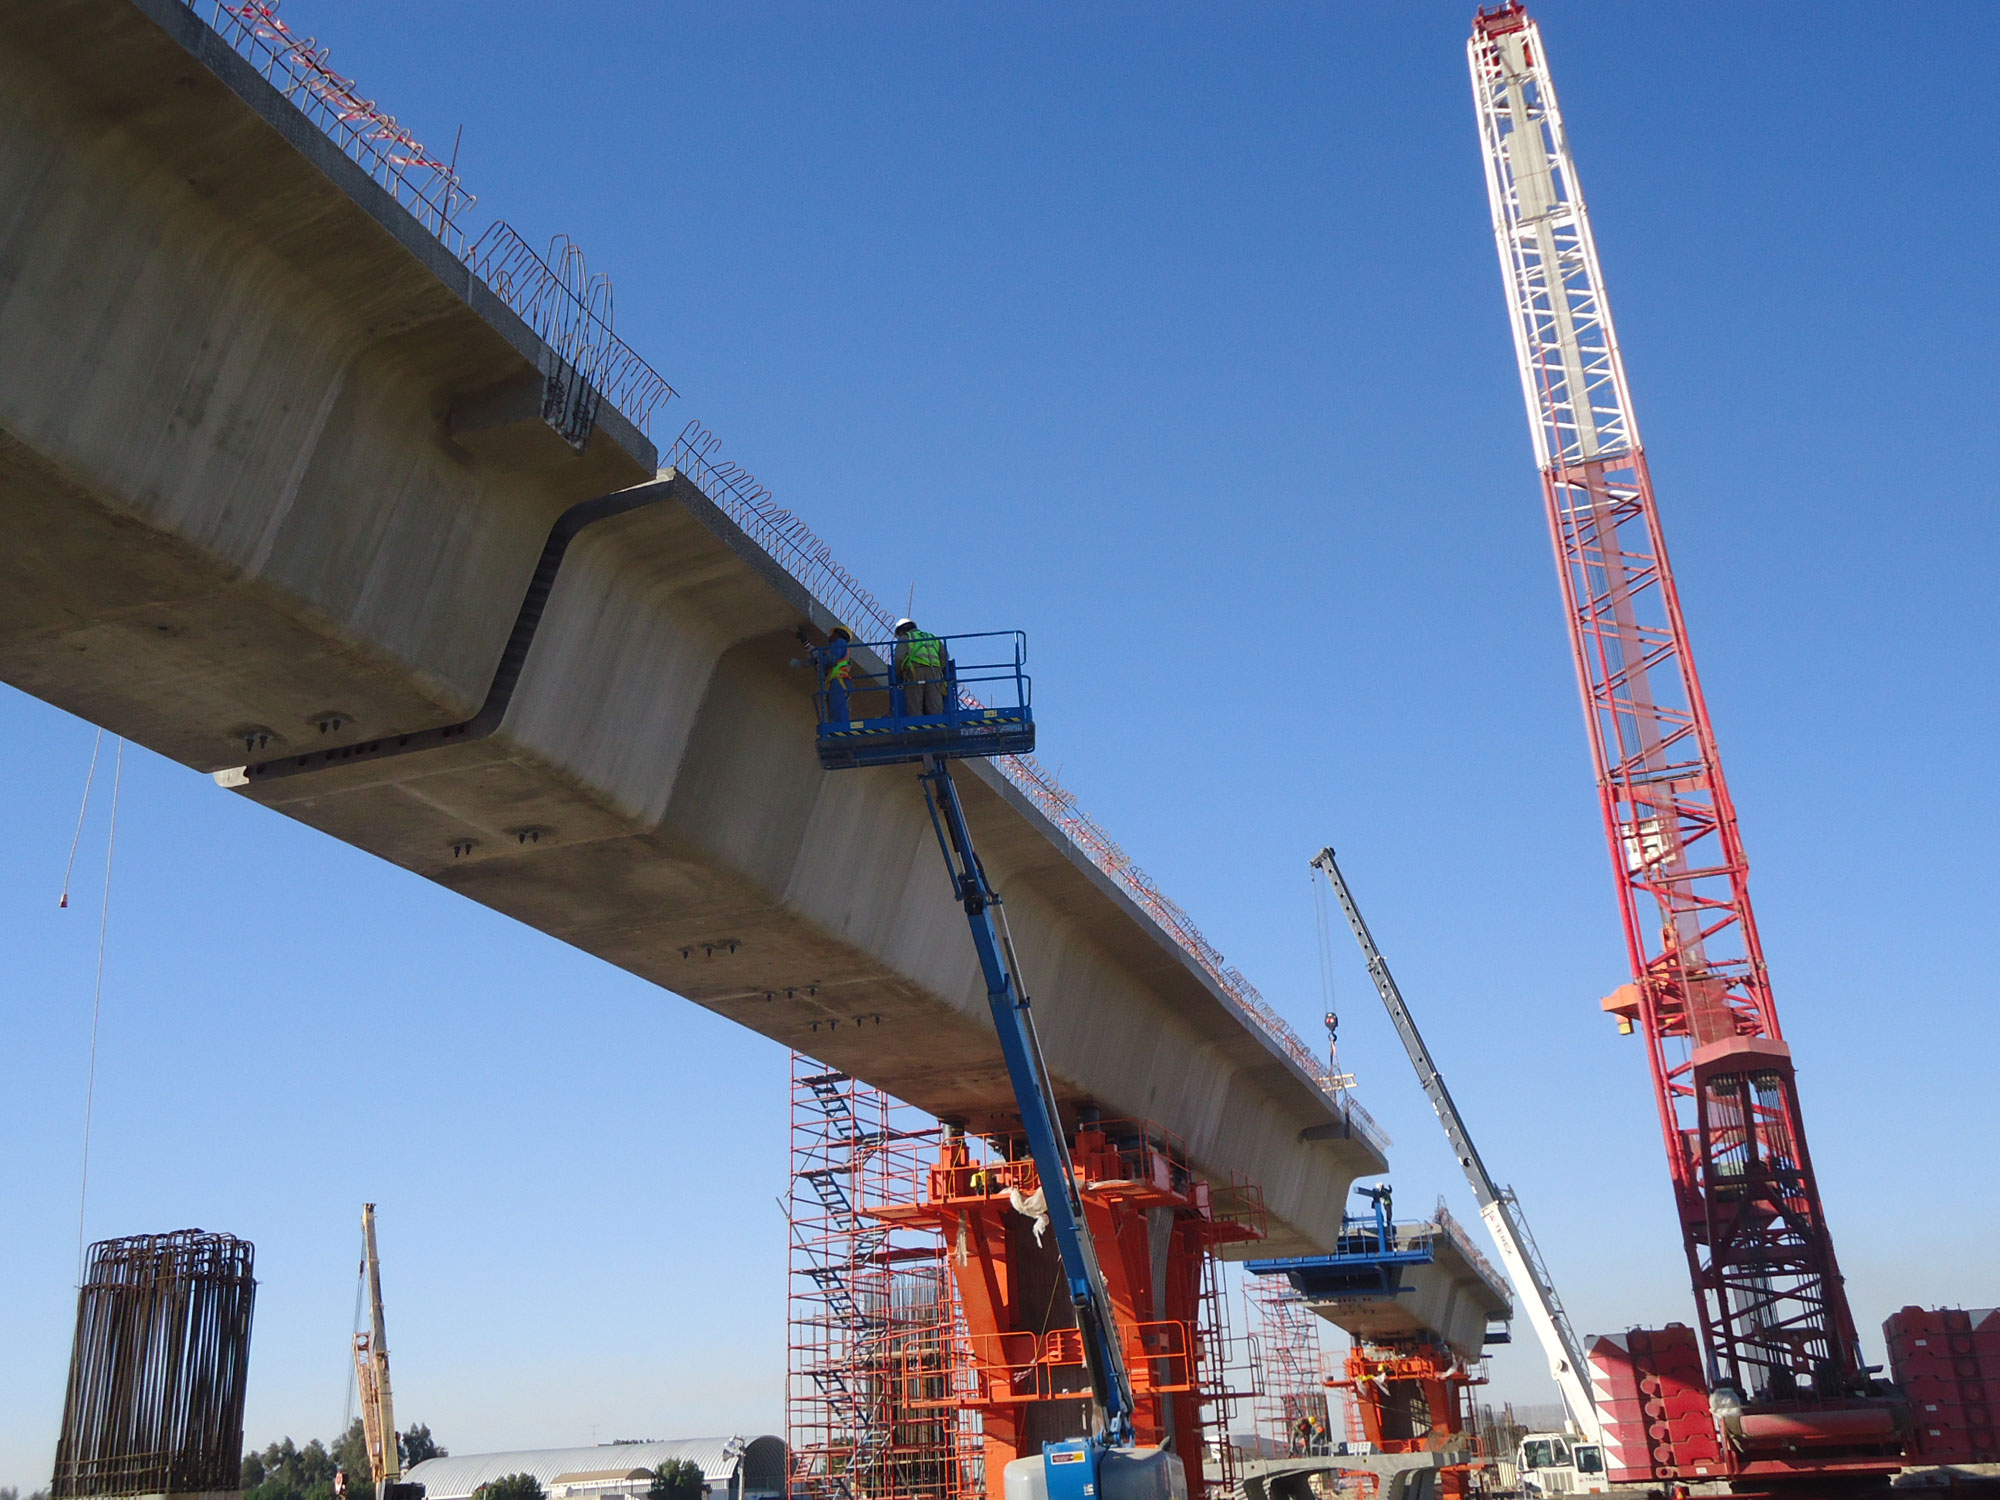 JRE cantilever bridge engineering project